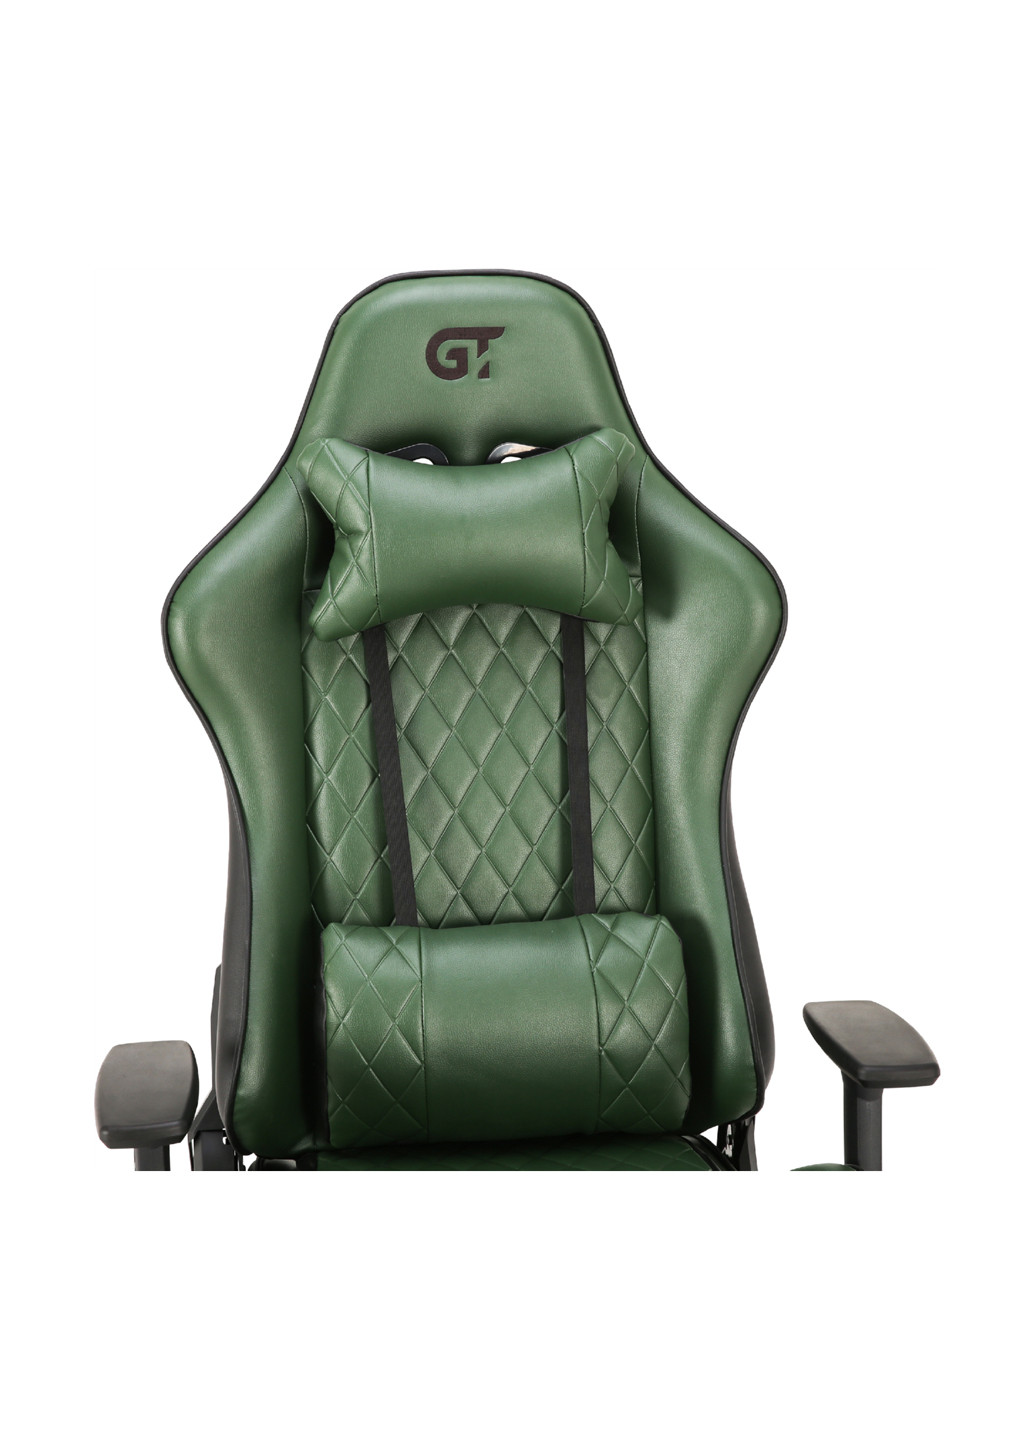 Геймерское кресло GT Racer x-2540 black/dark green (177294934)